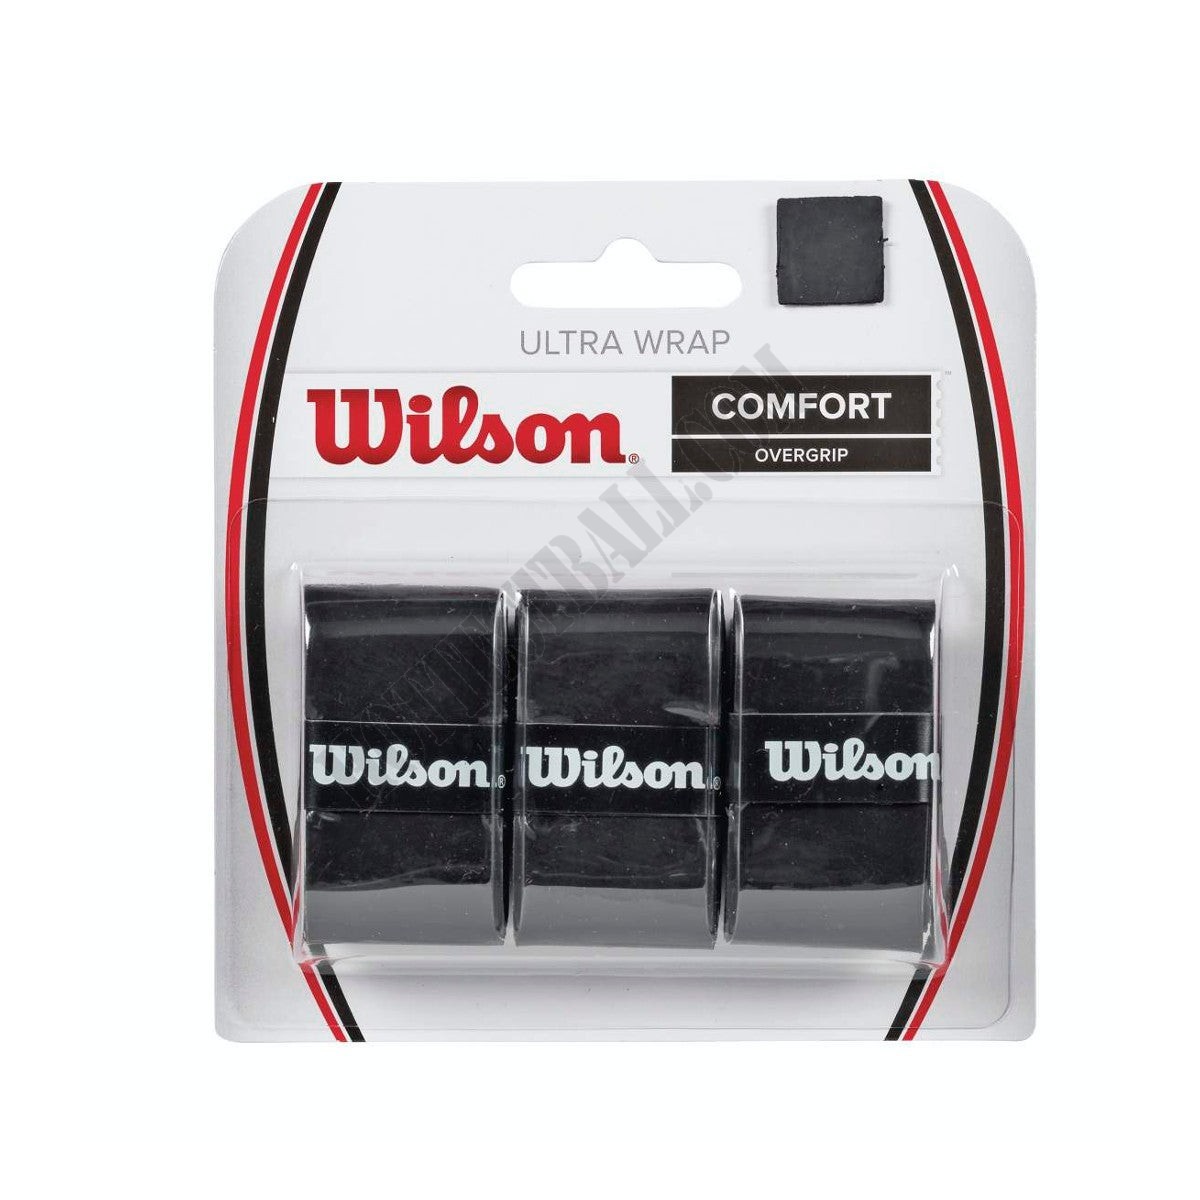 Ultra Grip Wrap Black - 3 Pack - Wilson Discount Store - Ultra Grip Wrap Black - 3 Pack - Wilson Discount Store